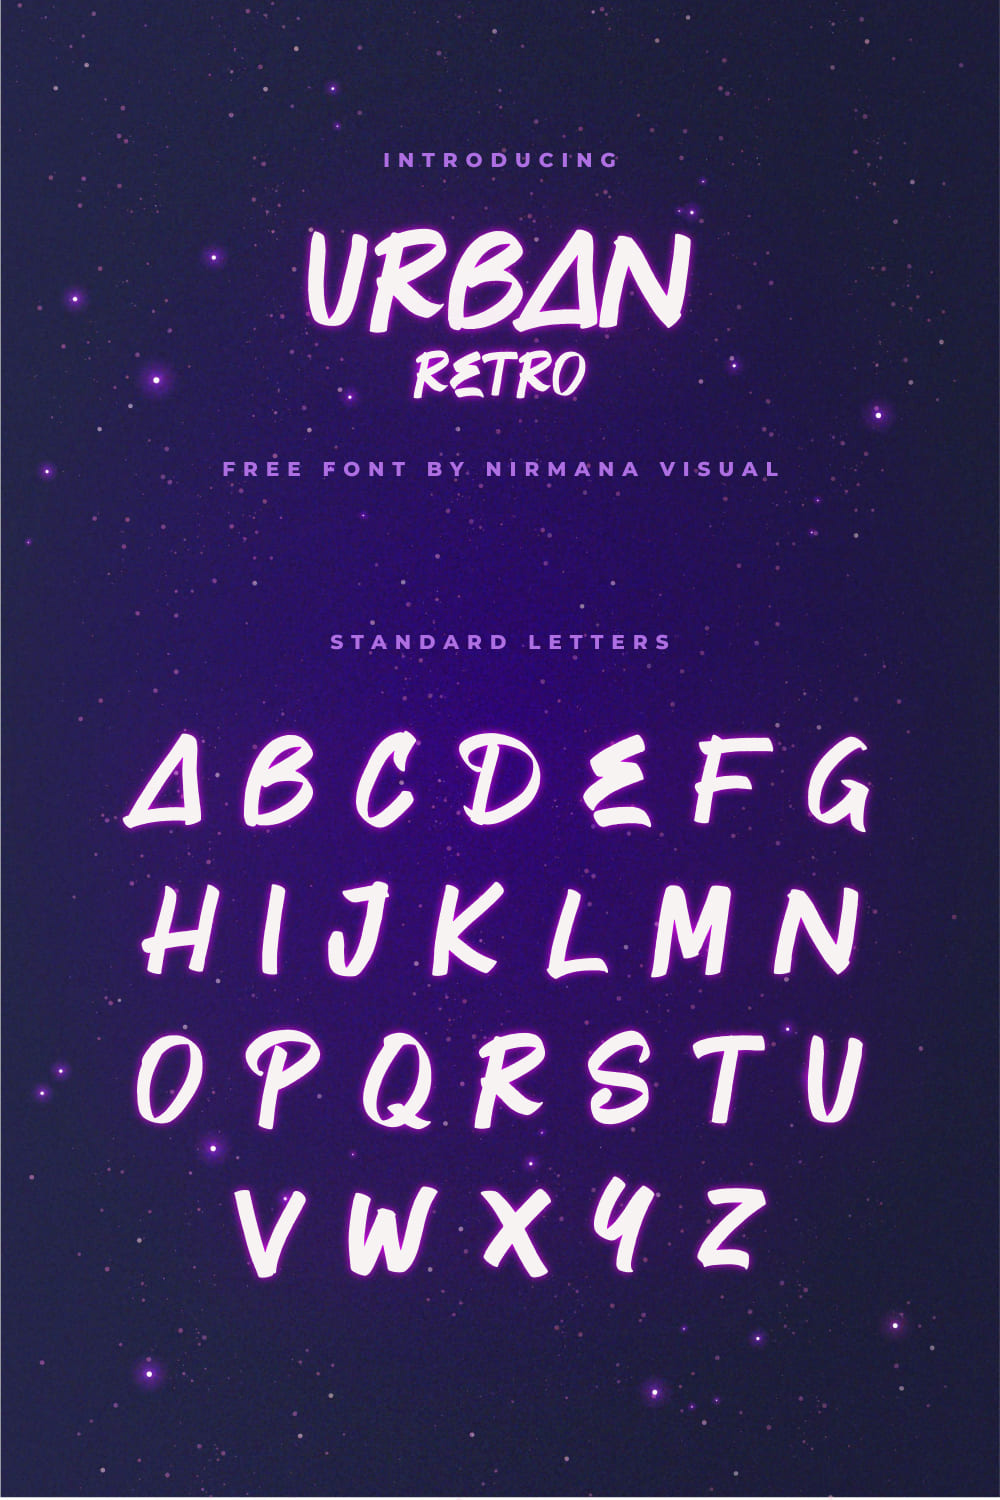 MasterBundles Free Urban Retro Font Pinterest Collage Image with Standart Letters.